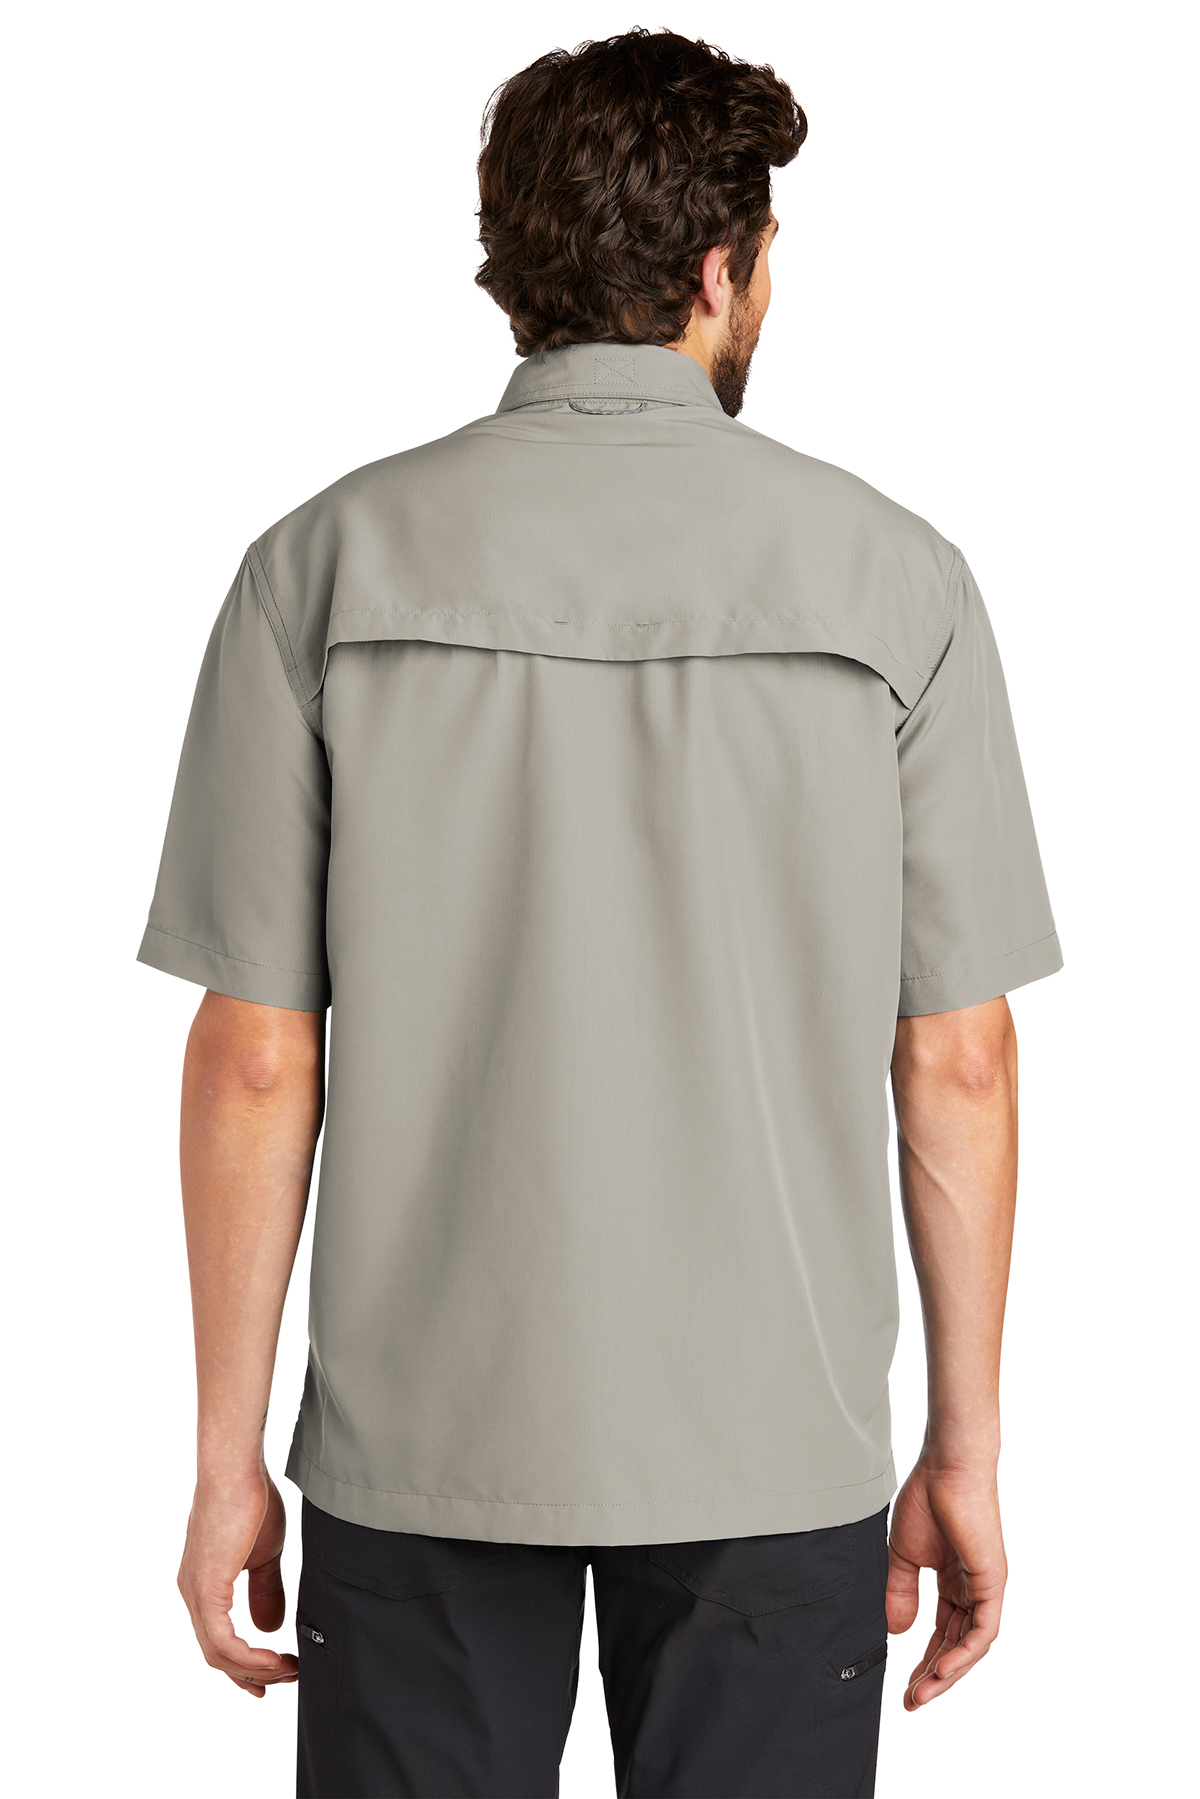 Eddie Bauer-Shirt-Men's-Light Tan-LS-XL - clothing & accessories